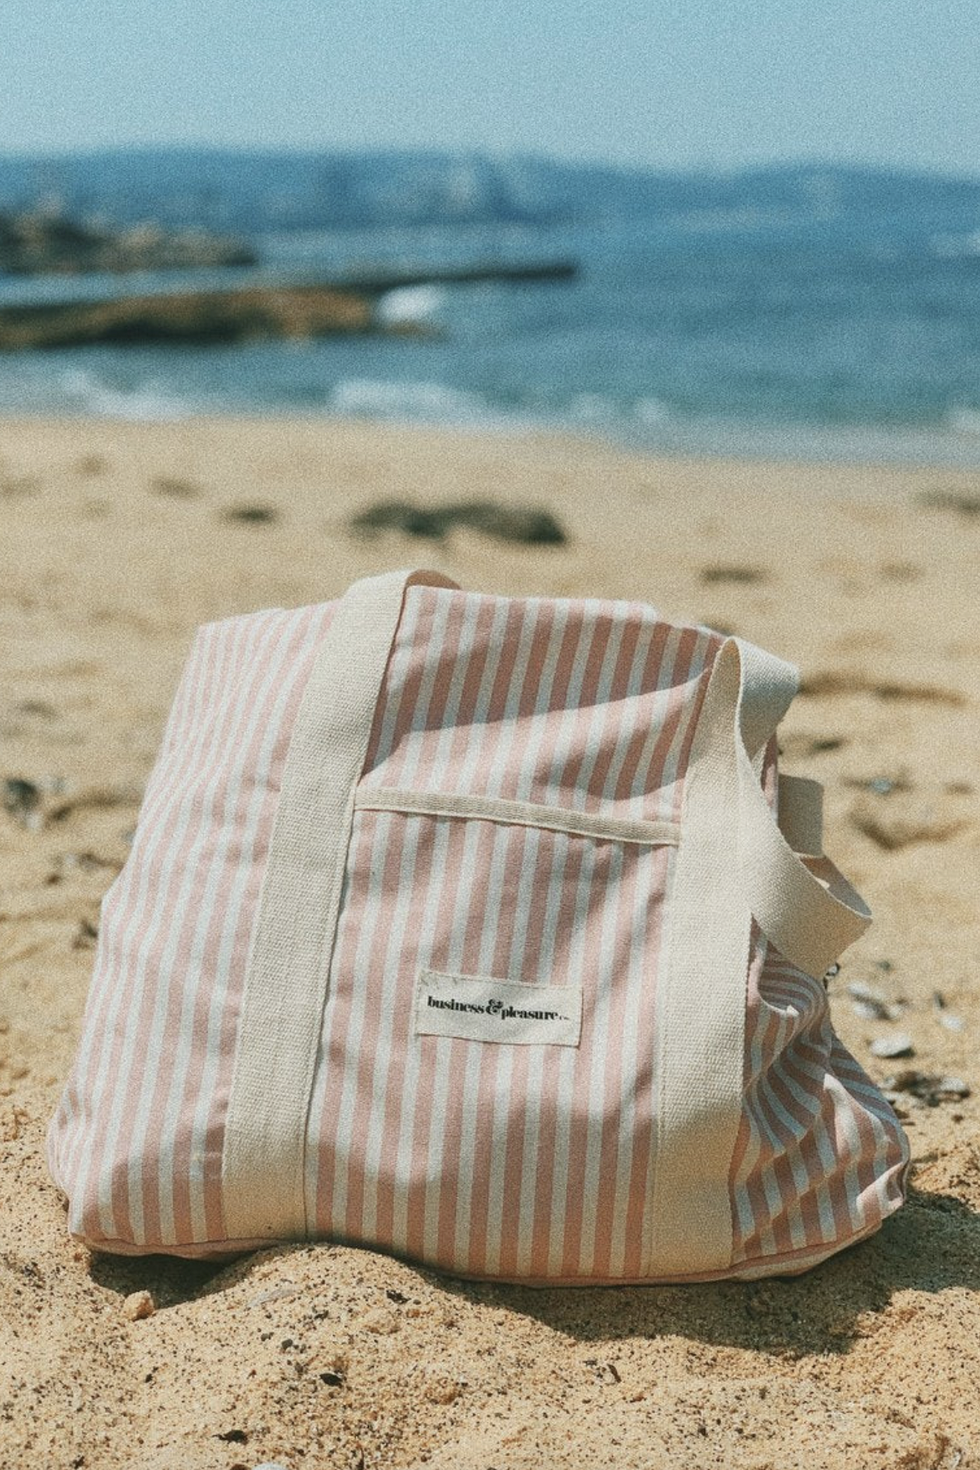 The Beach Bag